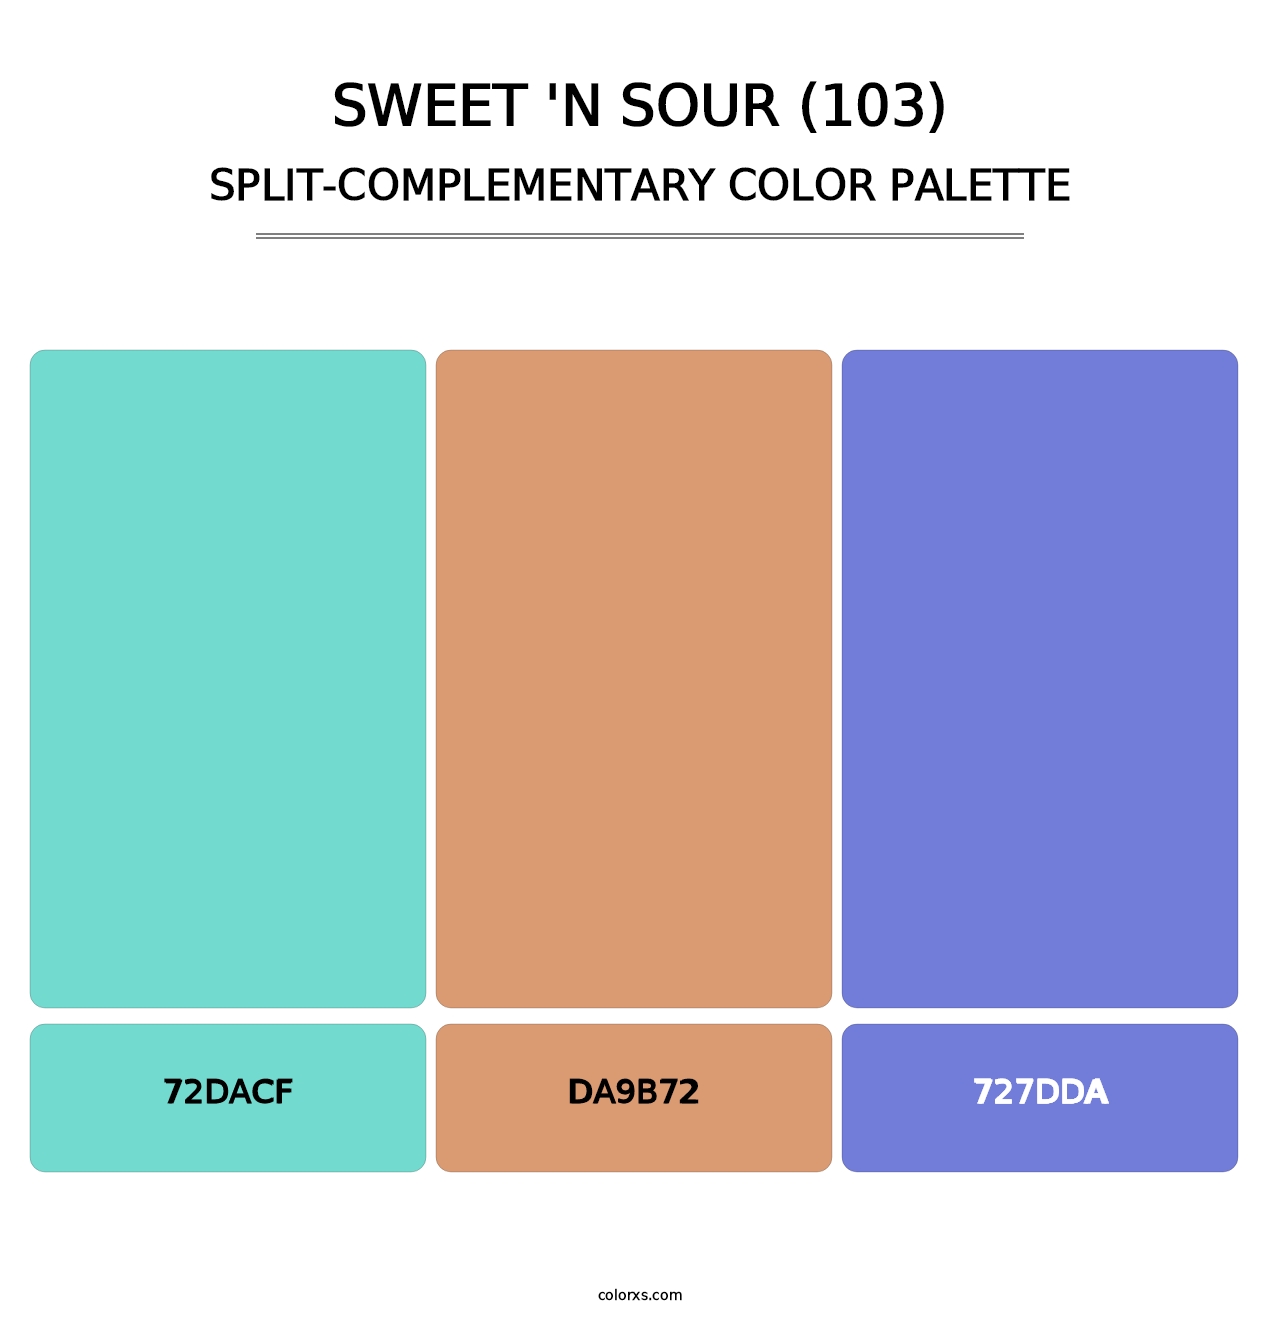 Sweet 'n Sour (103) - Split-Complementary Color Palette